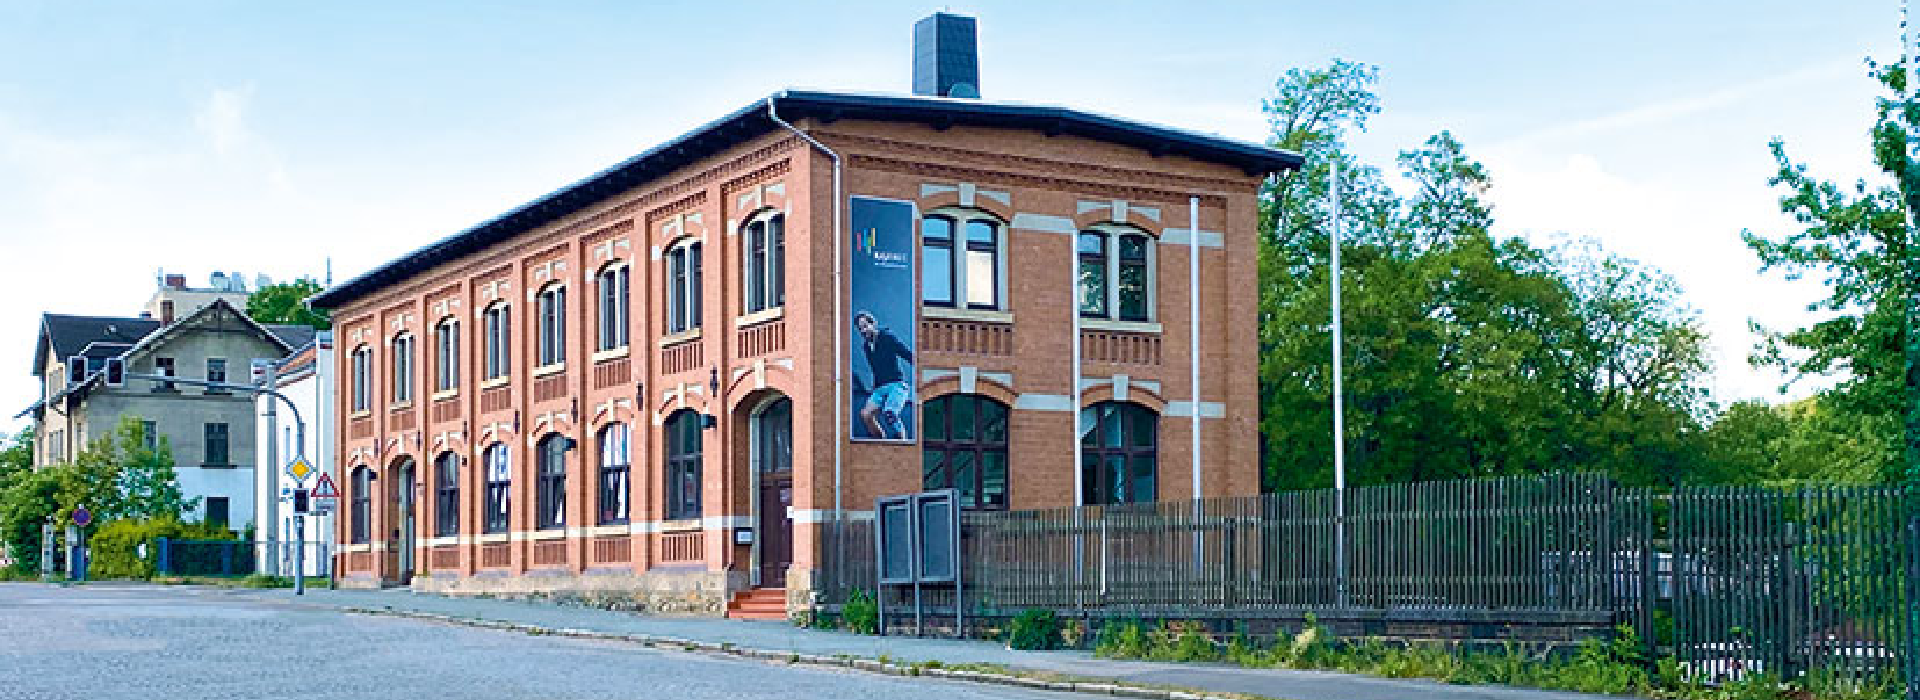 Dein Kajamed Hauptsitz in Zwickau, Am Bahnhof 4